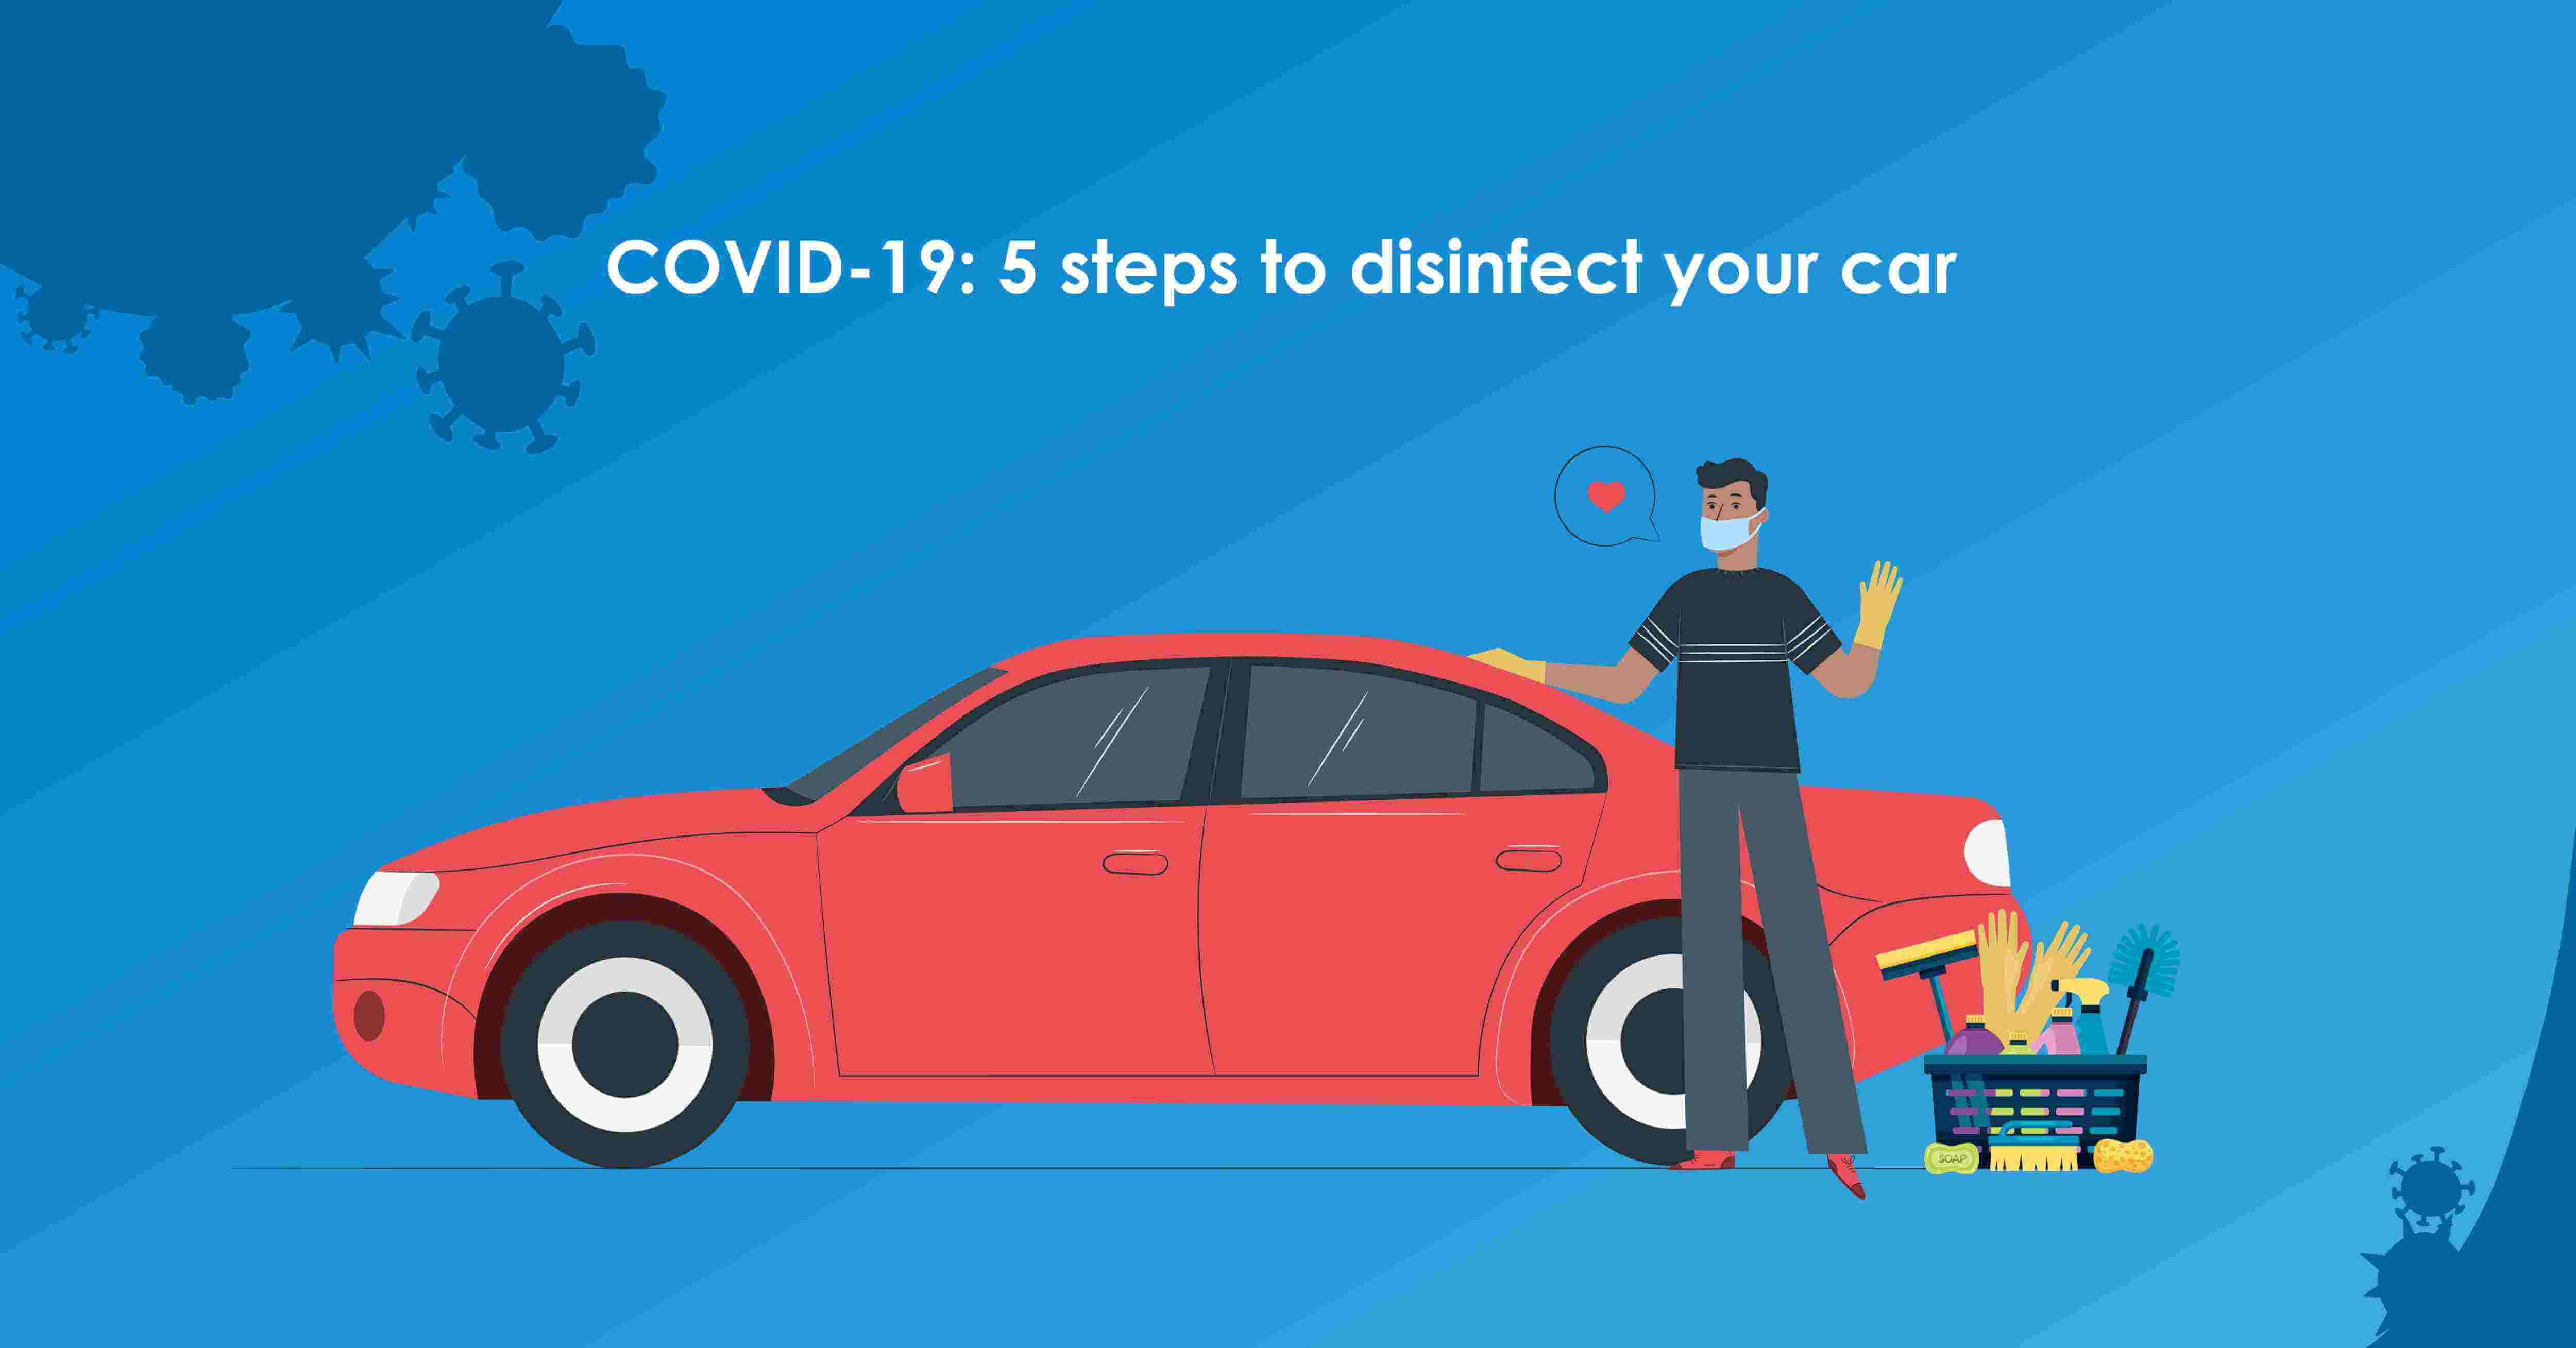 Disinfect your car against coronavirus